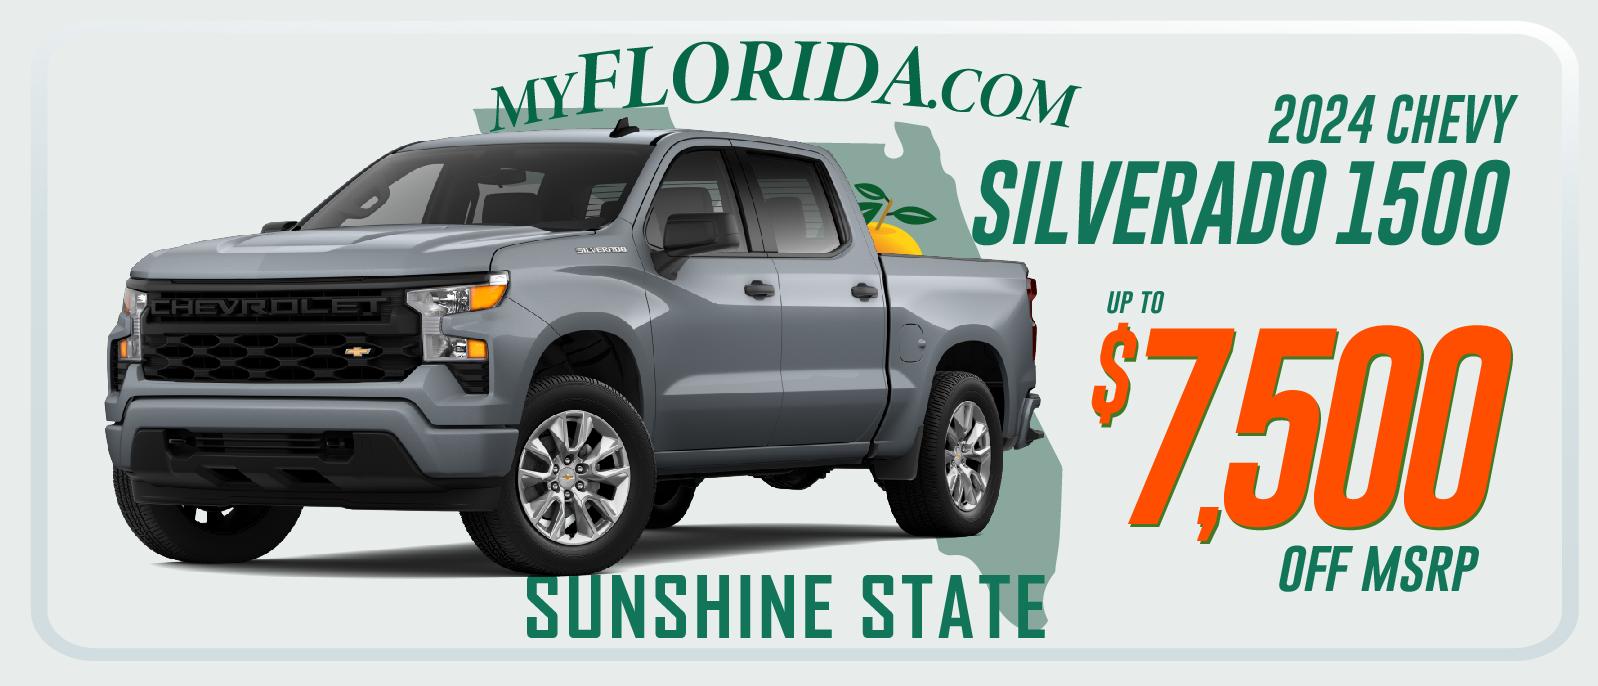 NEW Chevy Silverado 1500 - save up to $7500